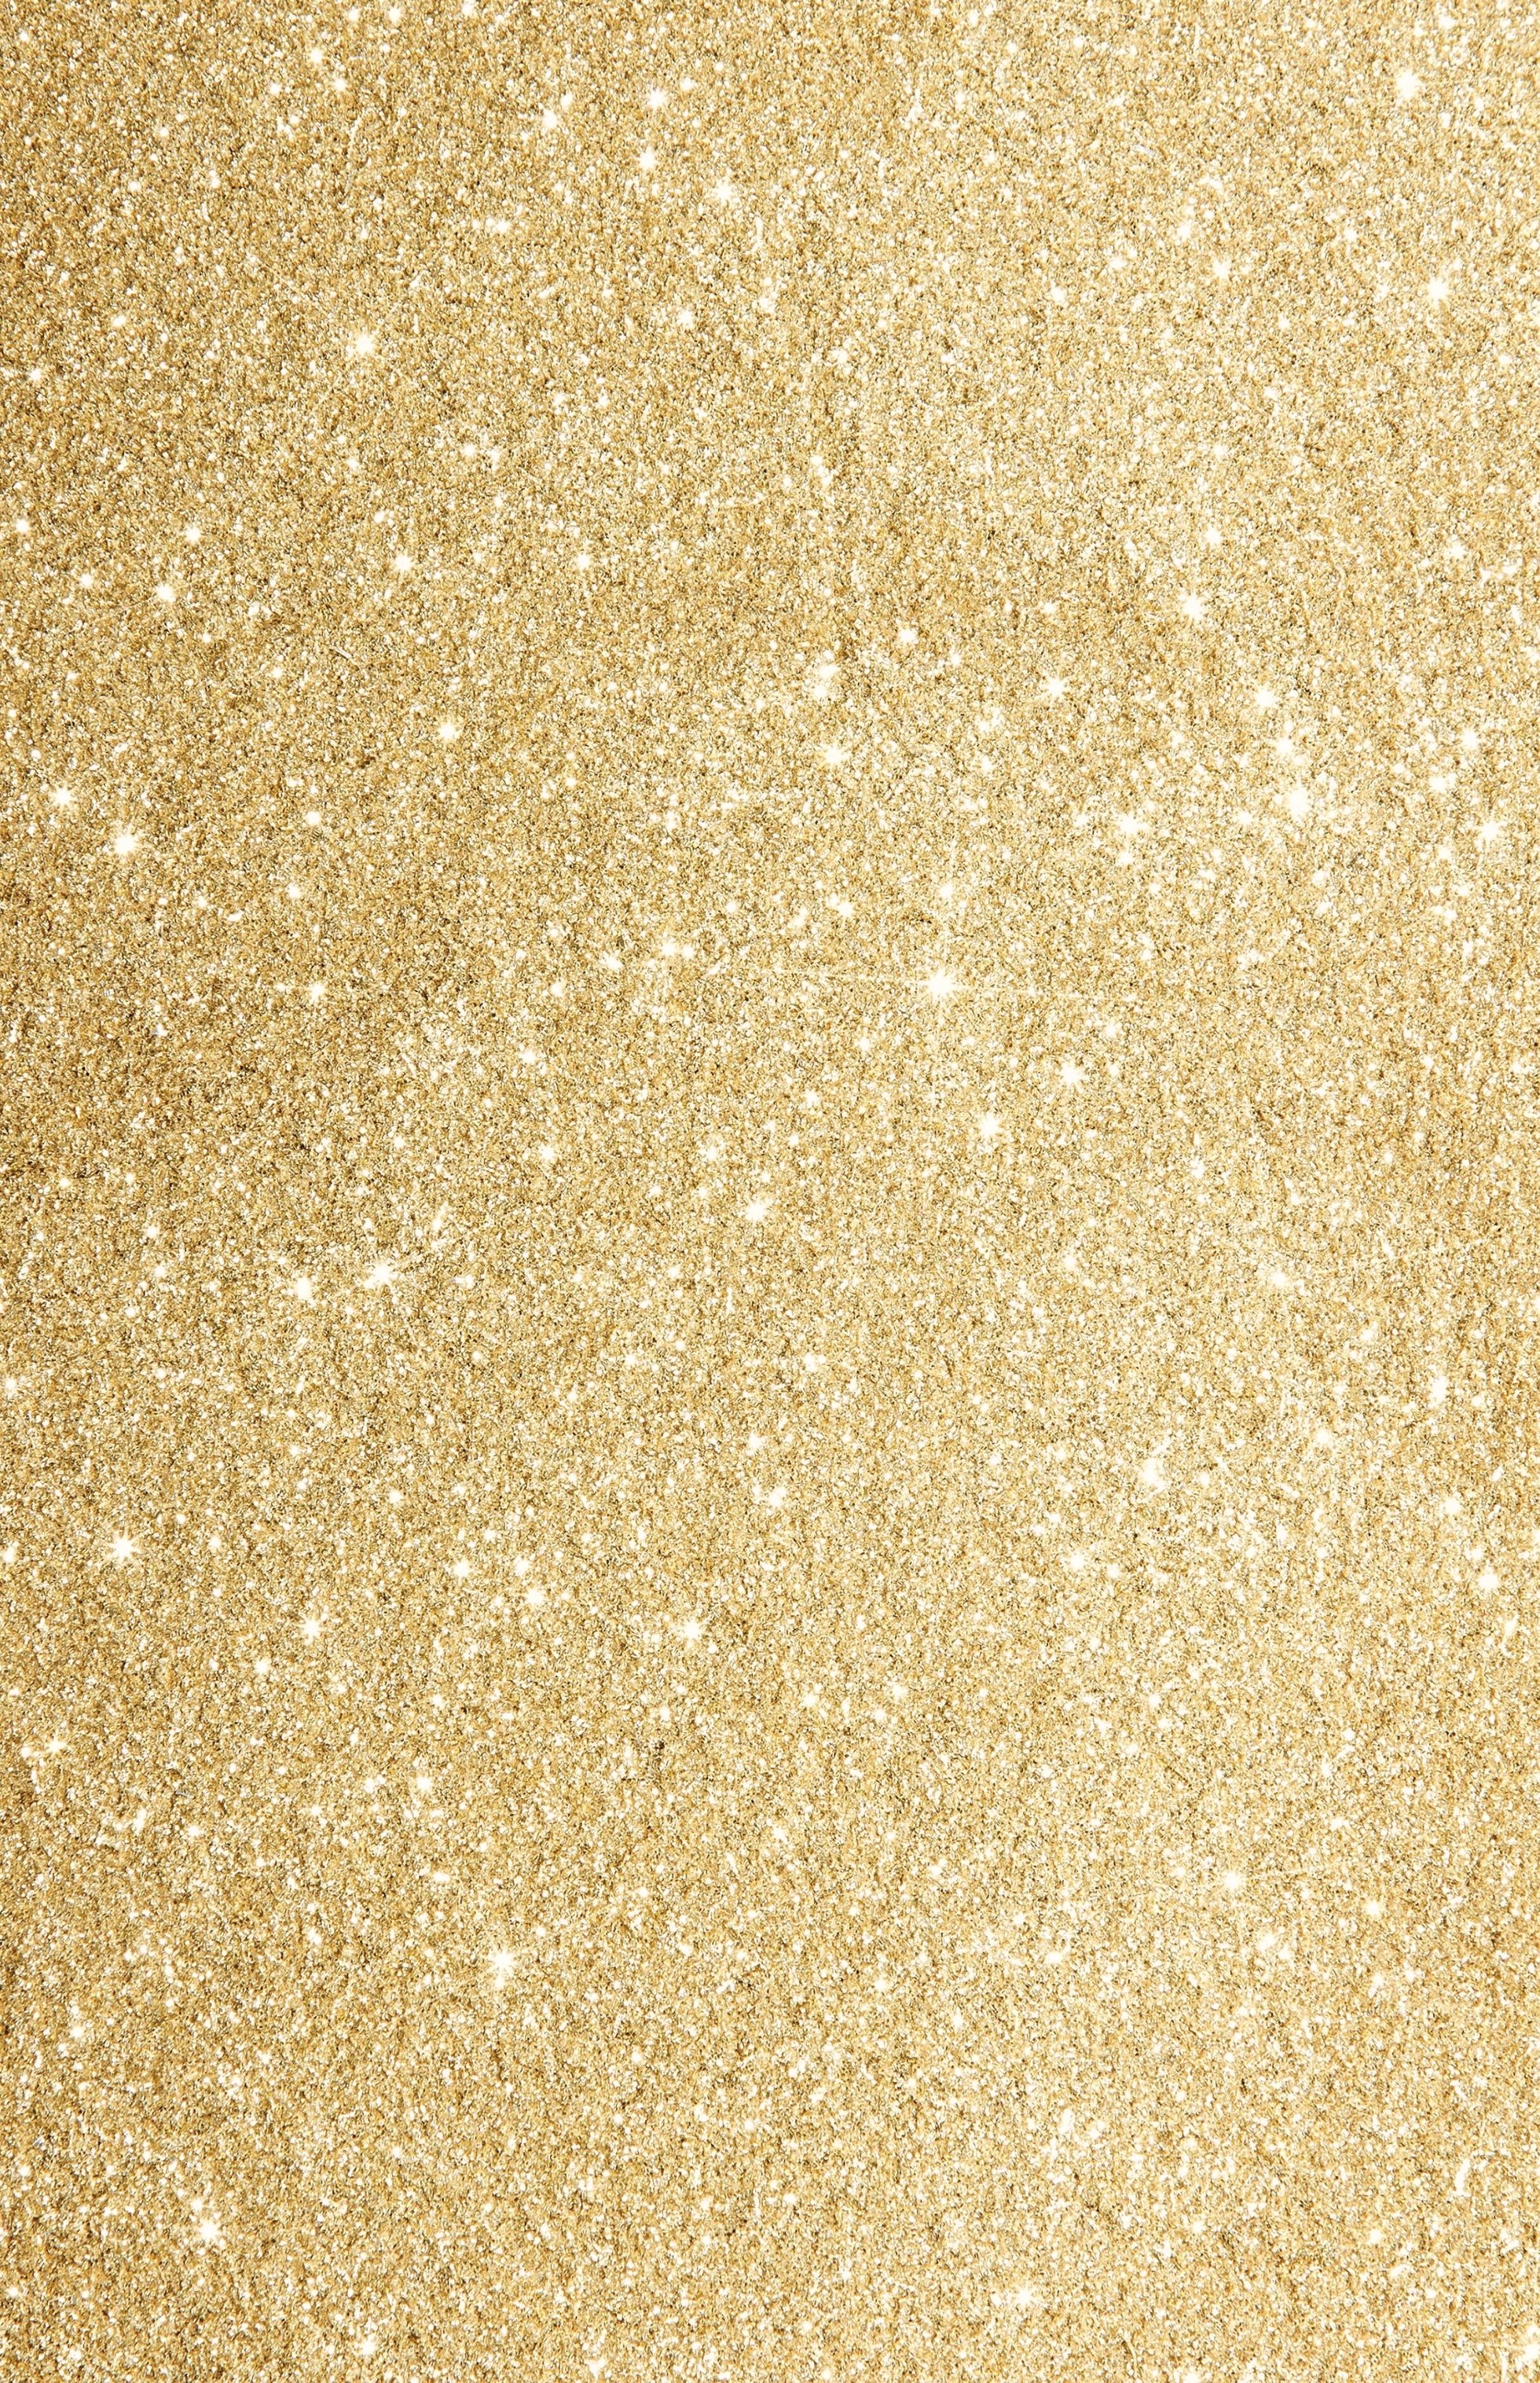 Gold Glitter Background - HD Wallpaper 